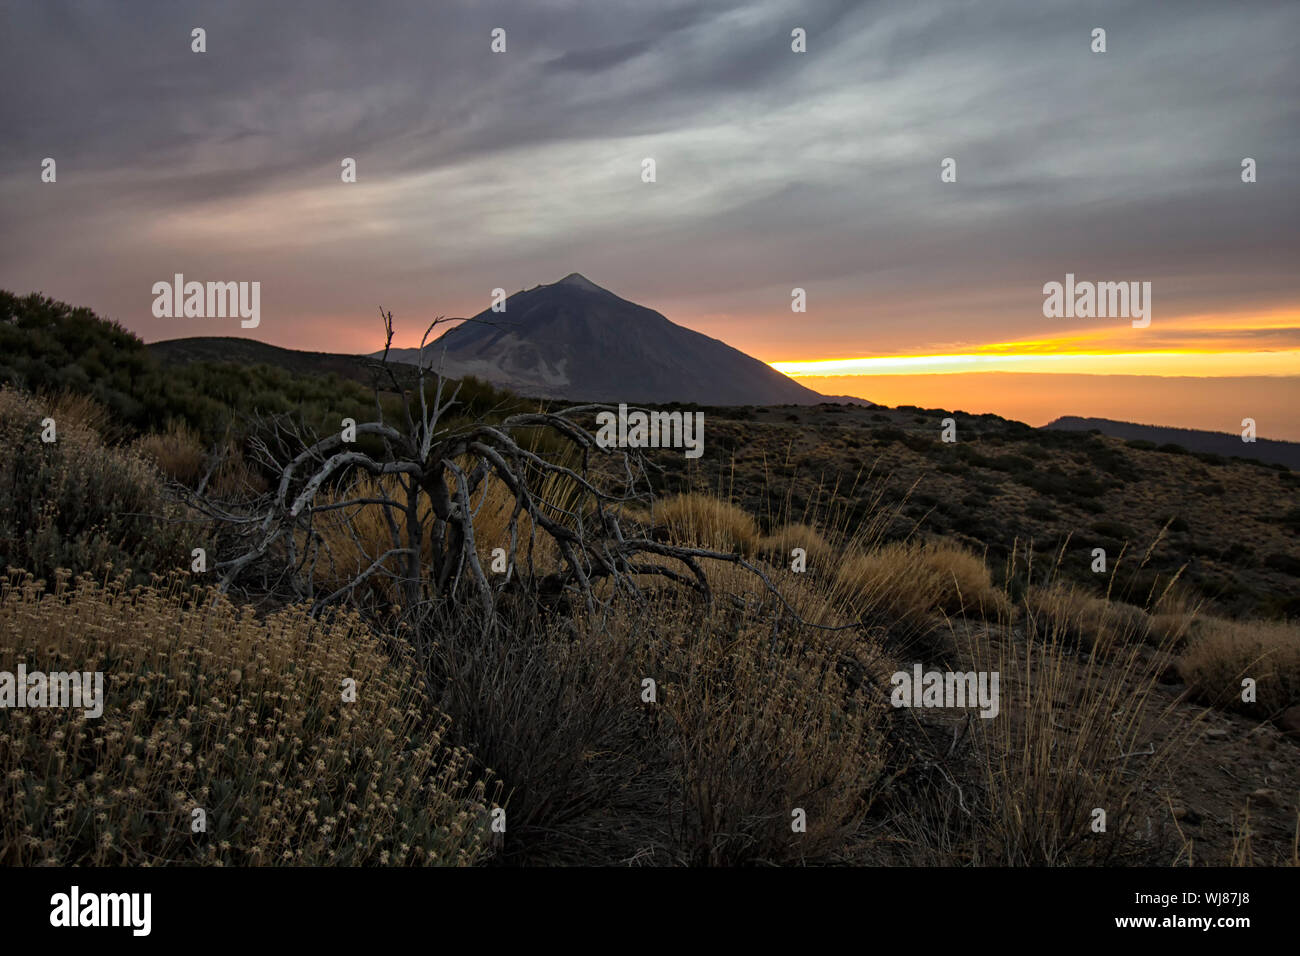 the teide volcano at sunset Stock Photo